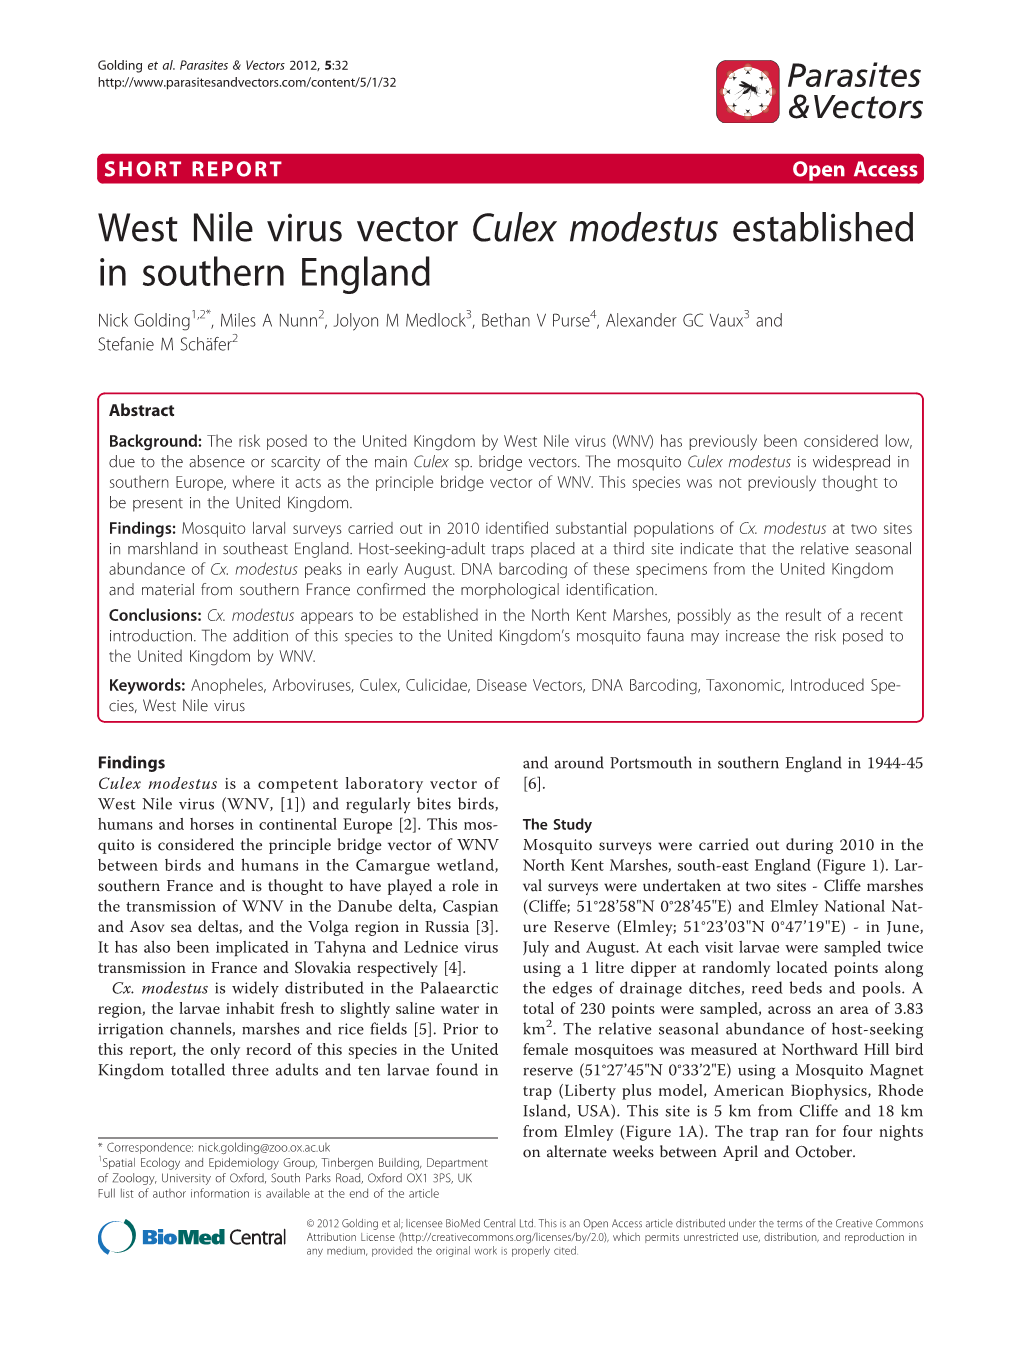 West Nile Virus Vector Culex Modestus